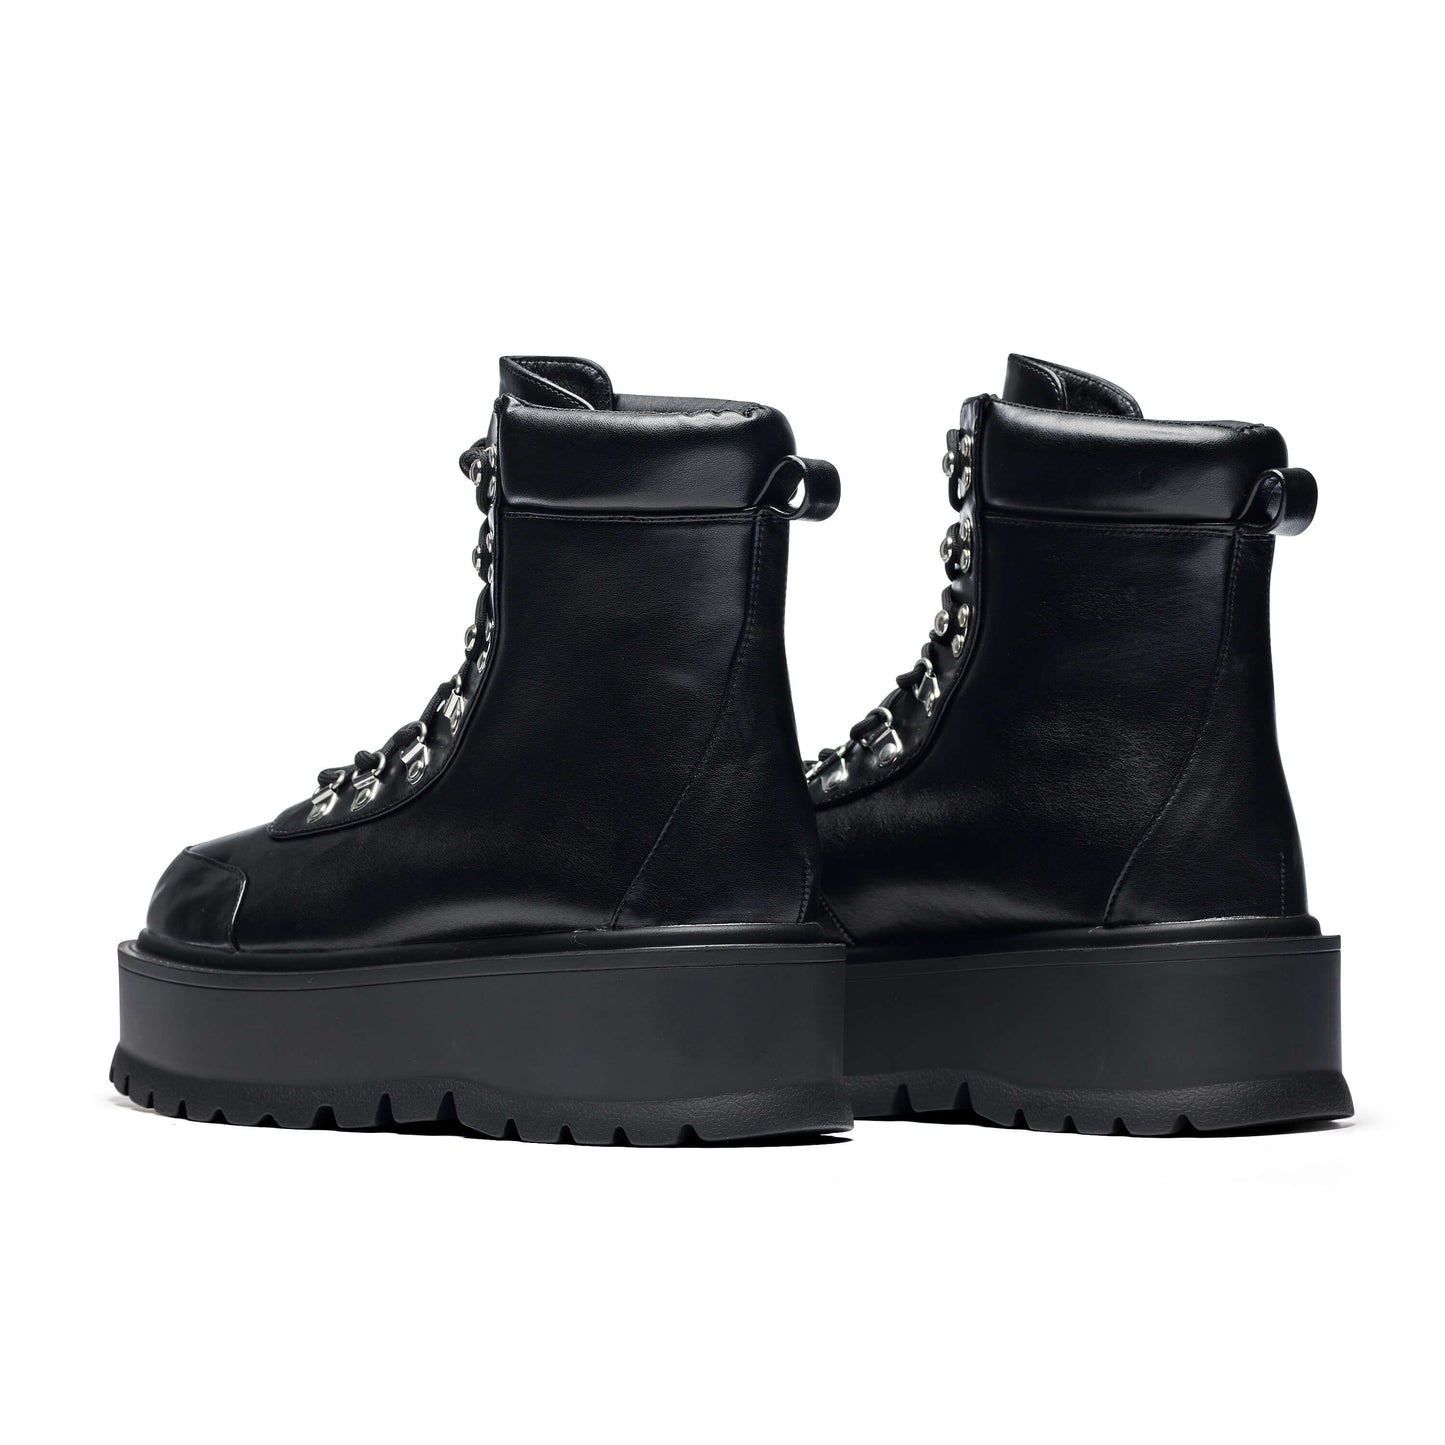 HYDRA All Black Matrix Platform Boots - Ankle Boots - KOI Footwear - Black - Back View